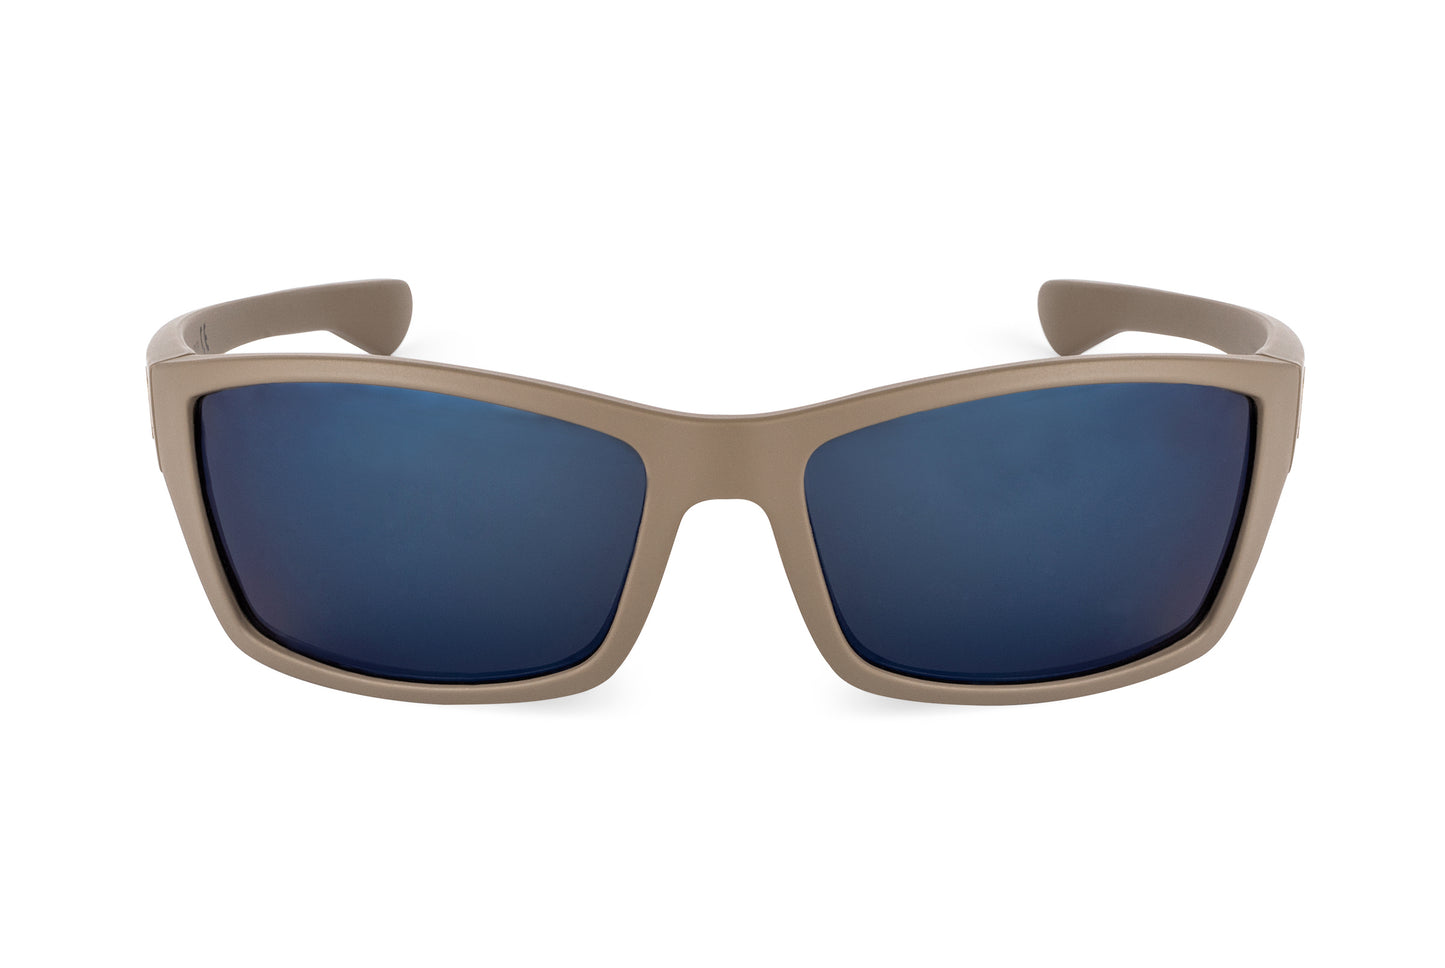  Coyote Eyewear Woodie Polarized Sunglasses with